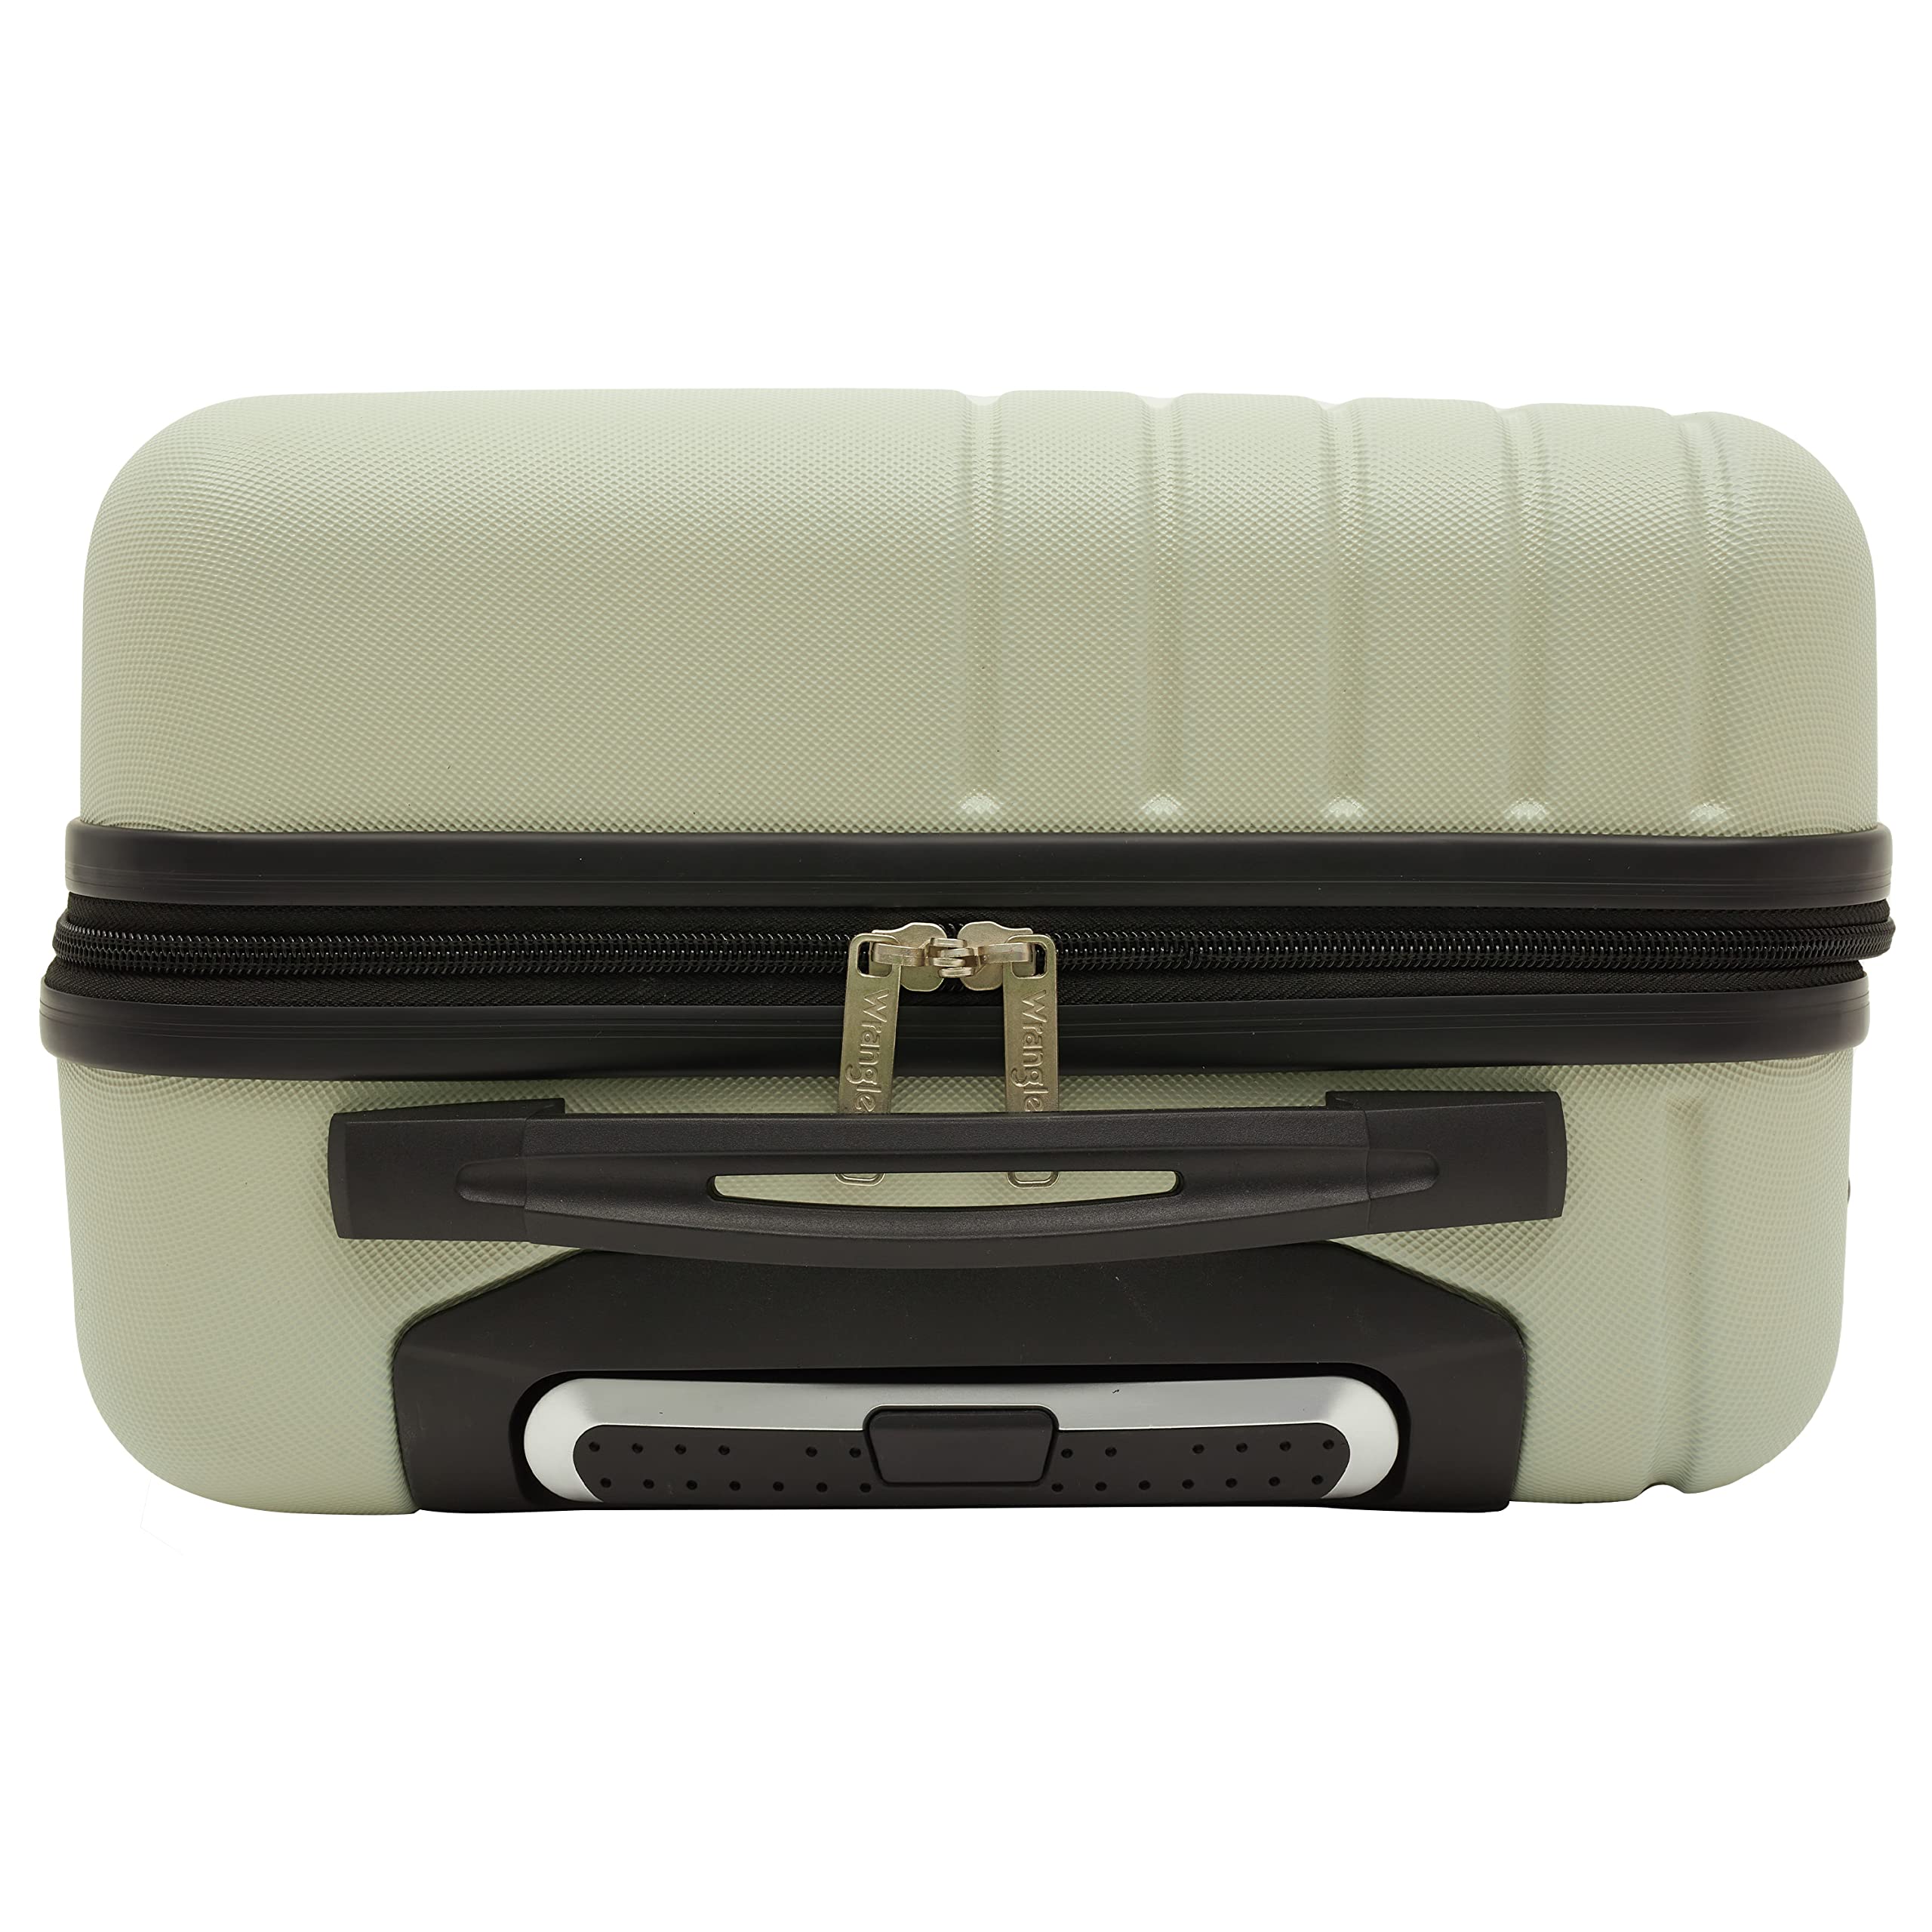 Wrangler Quest Luggage Set, Olive Green, 3 Piece Set (28